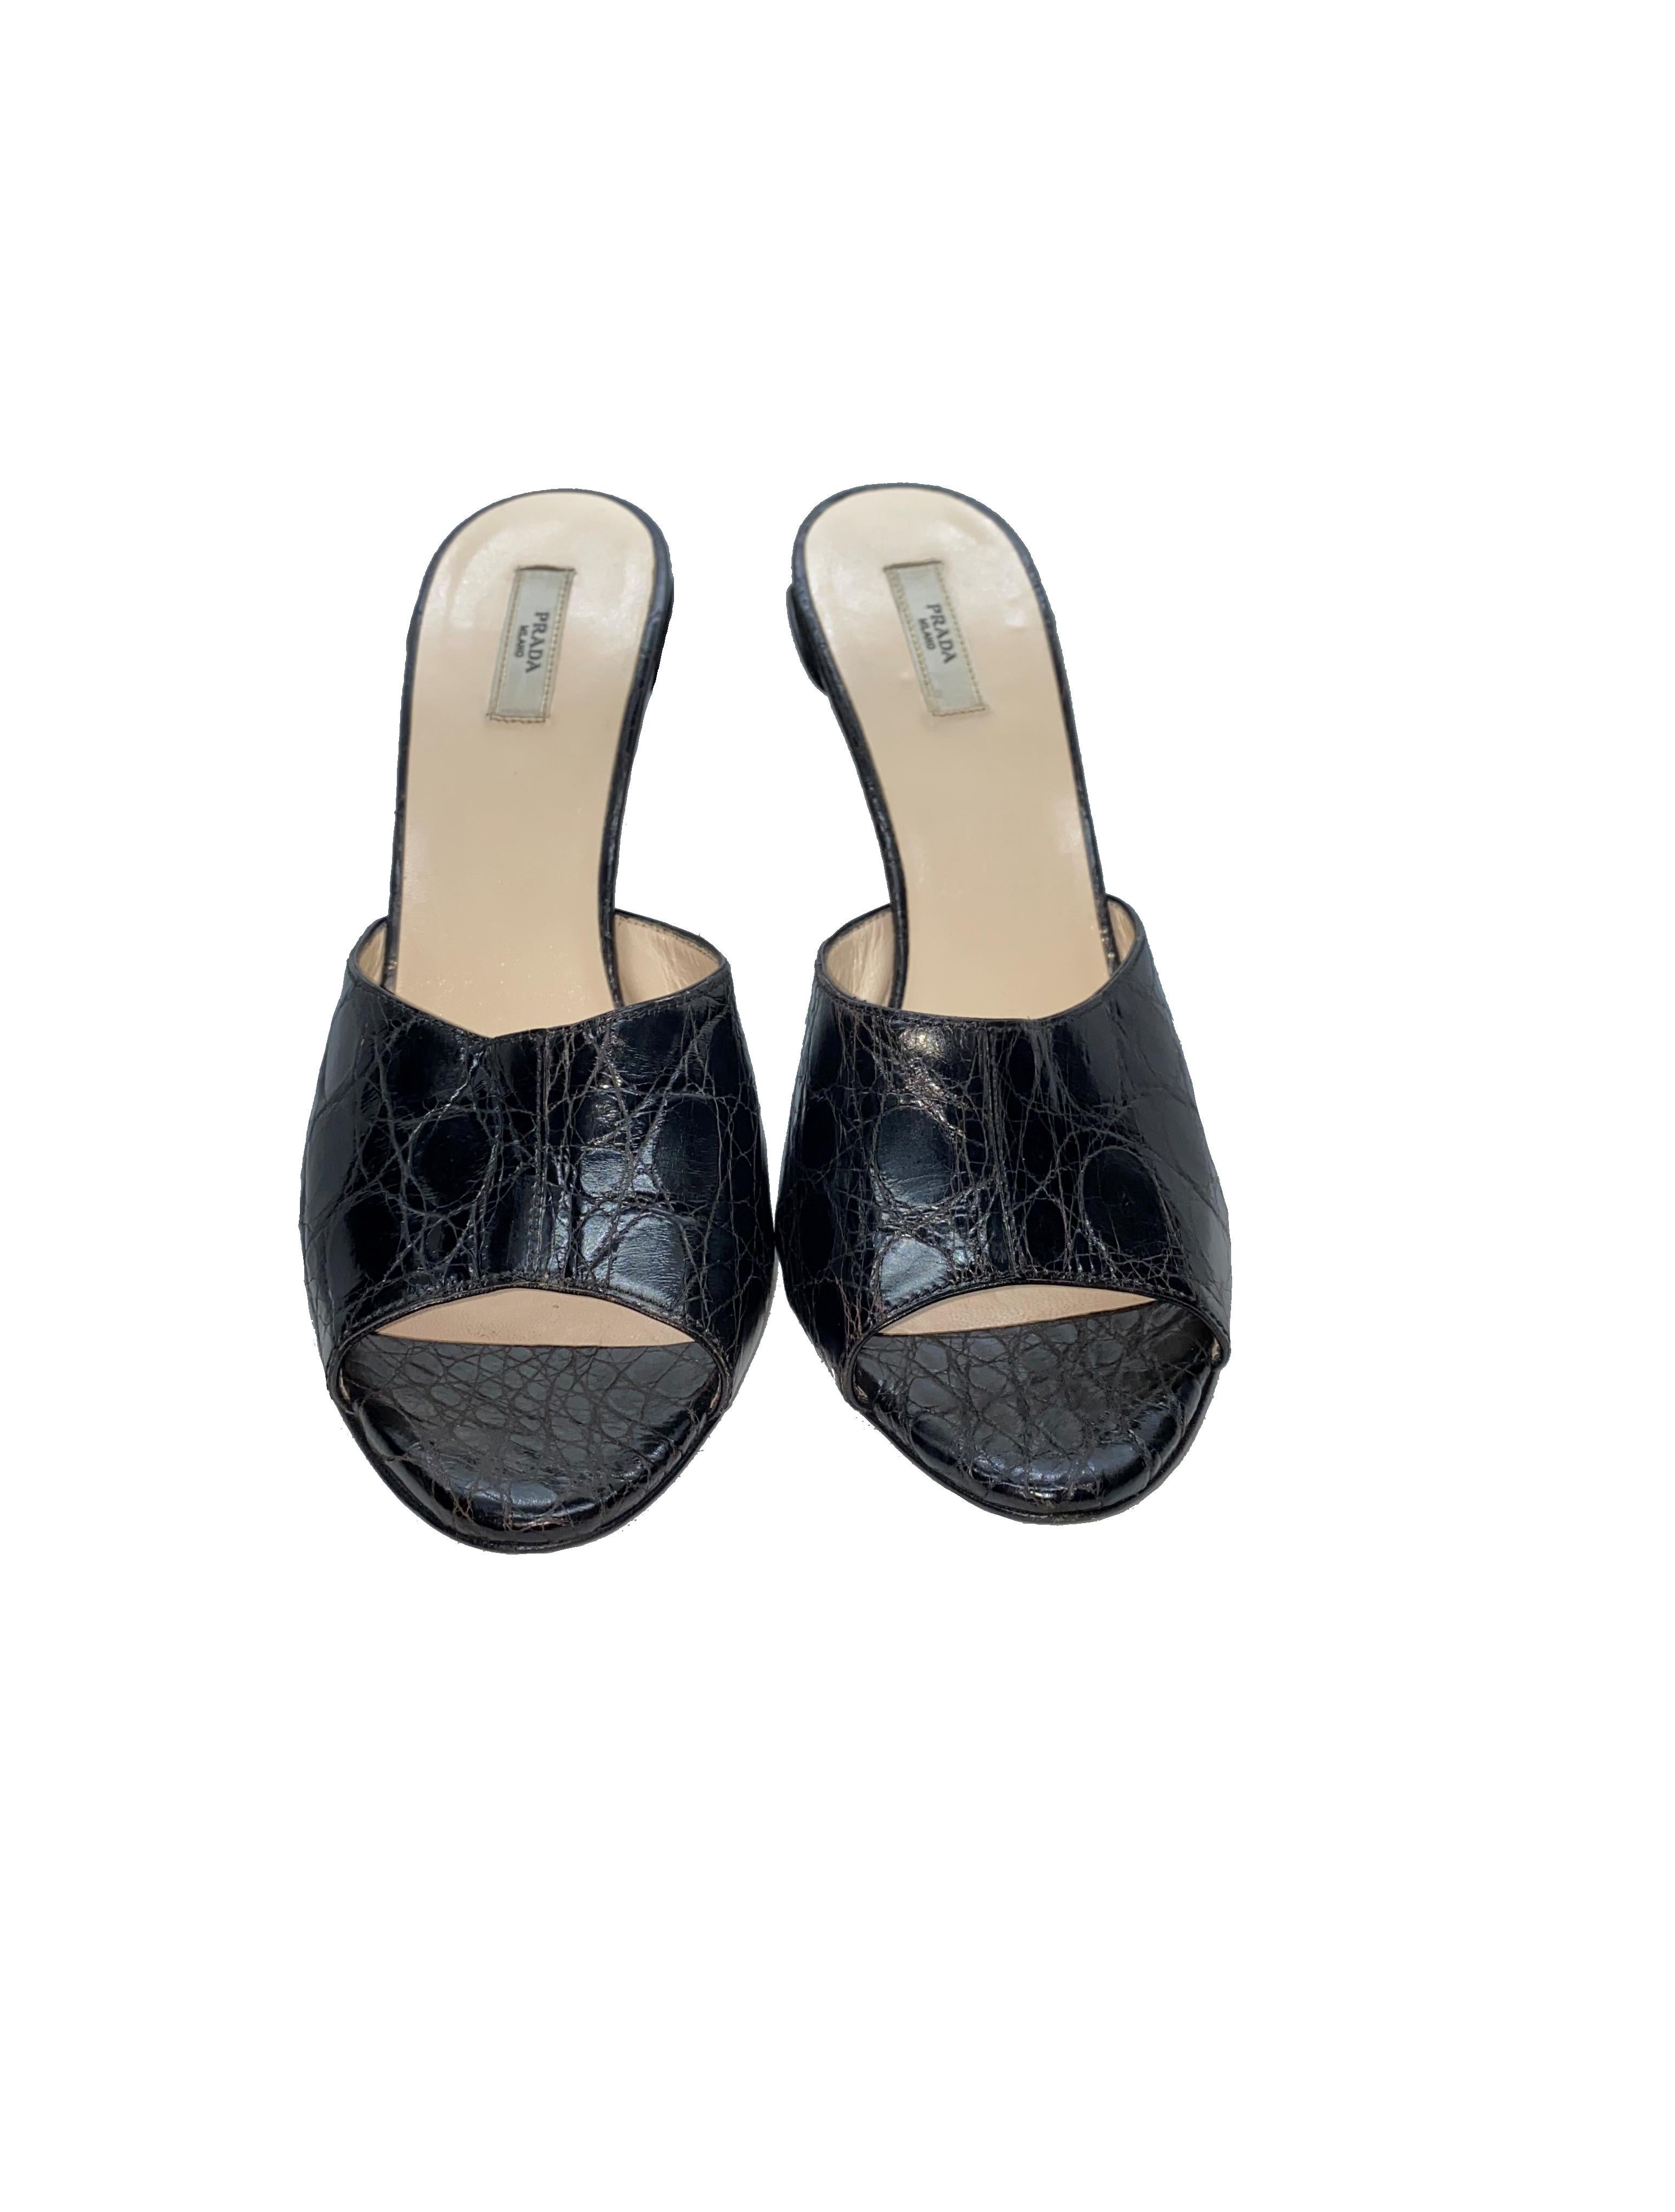 Unique Prada Flower Heel Exotic Black Crocodile High Heel Sandals Mules 38 For Sale 2